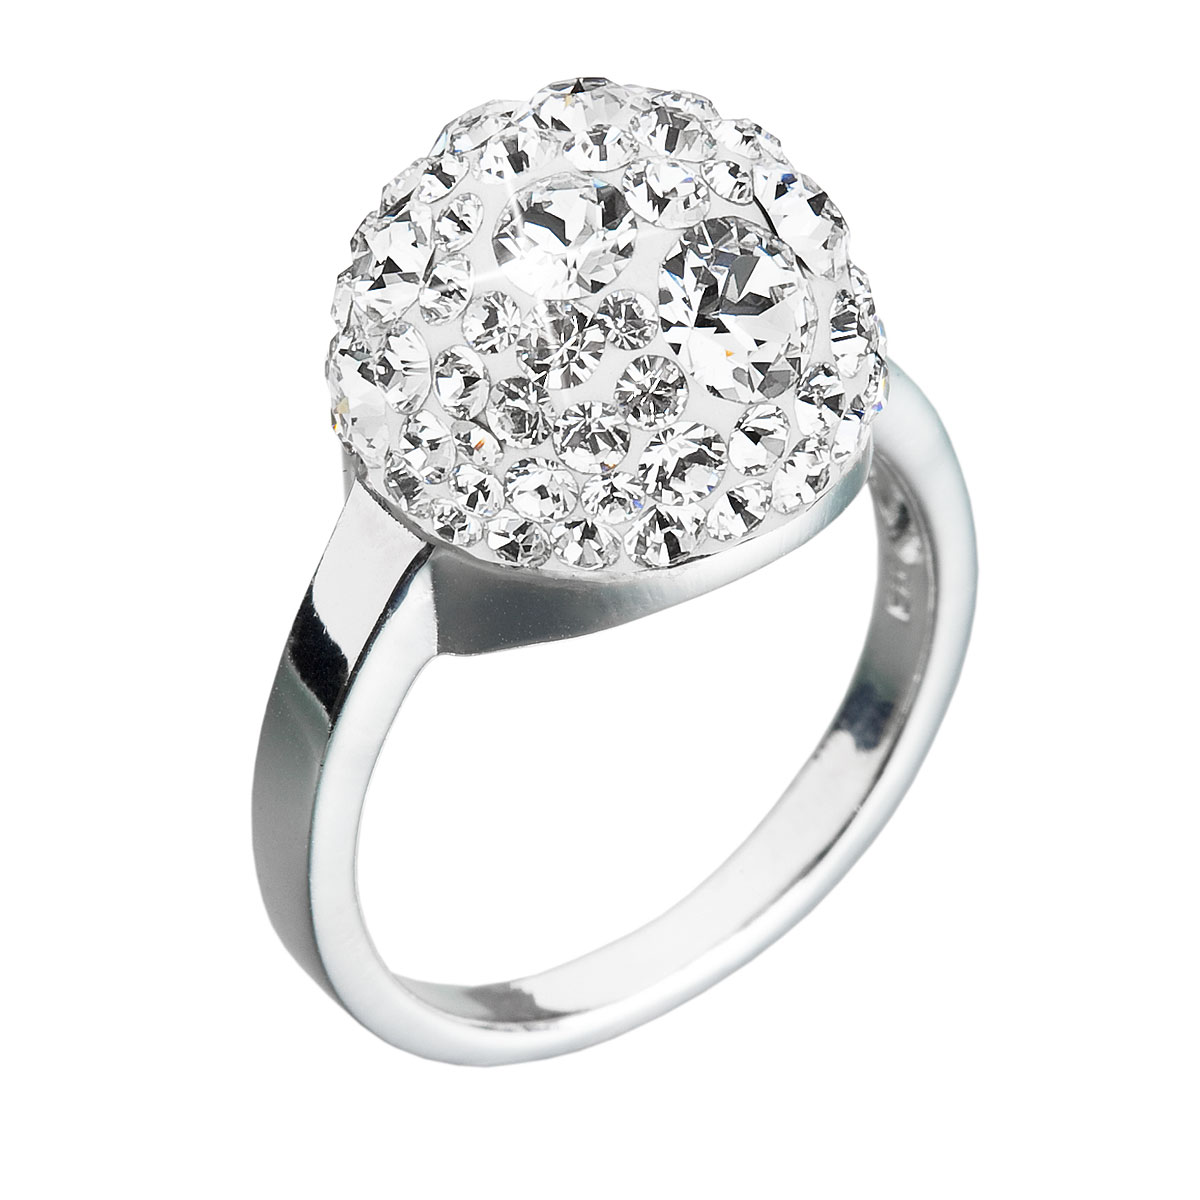 Evolution Group Stříbrný prsten s krystaly Swarovski bílá boule 35013.1 krystal